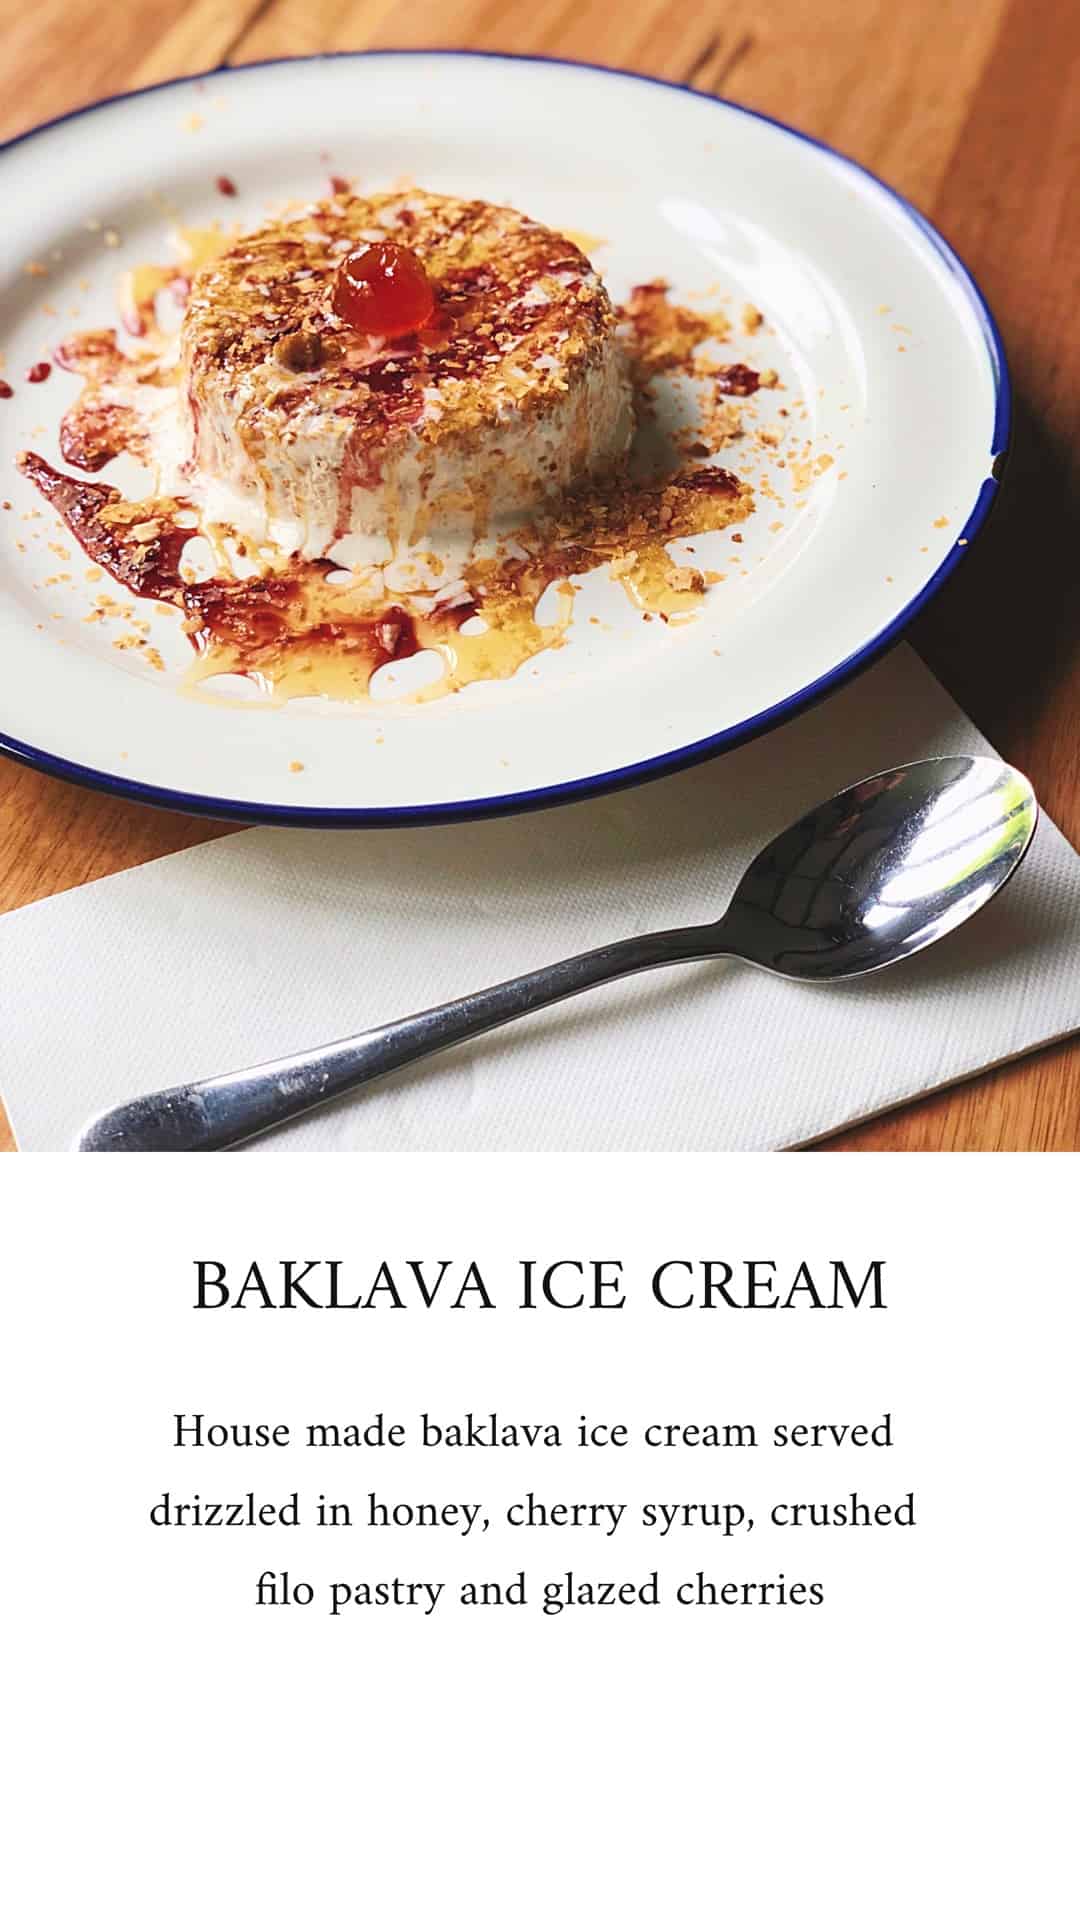 Delicious Baklava Ice Cream on the plate